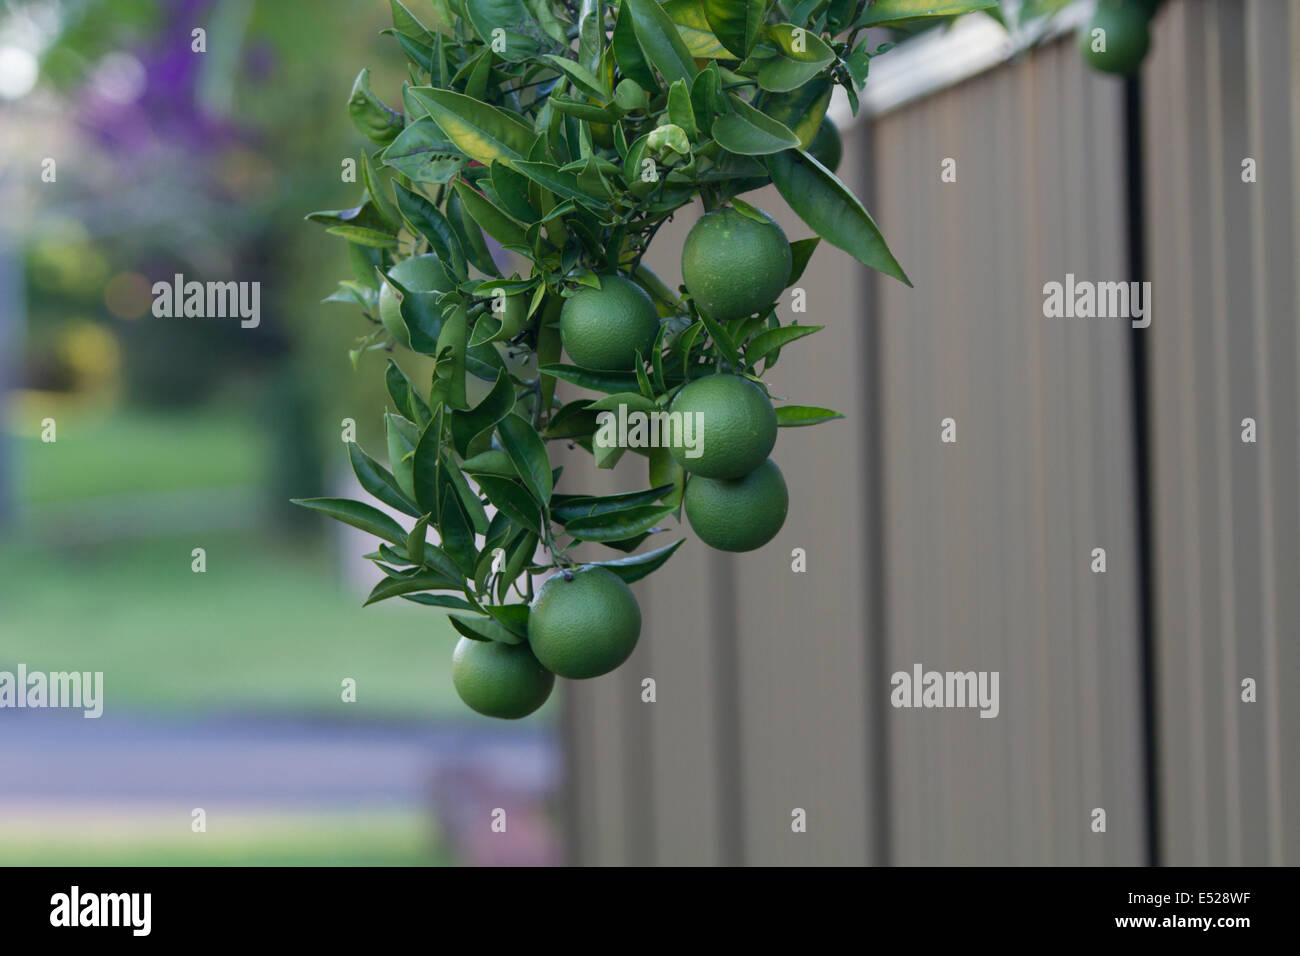 Naranjas verdes fotografías e imágenes de alta resolución - Alamy